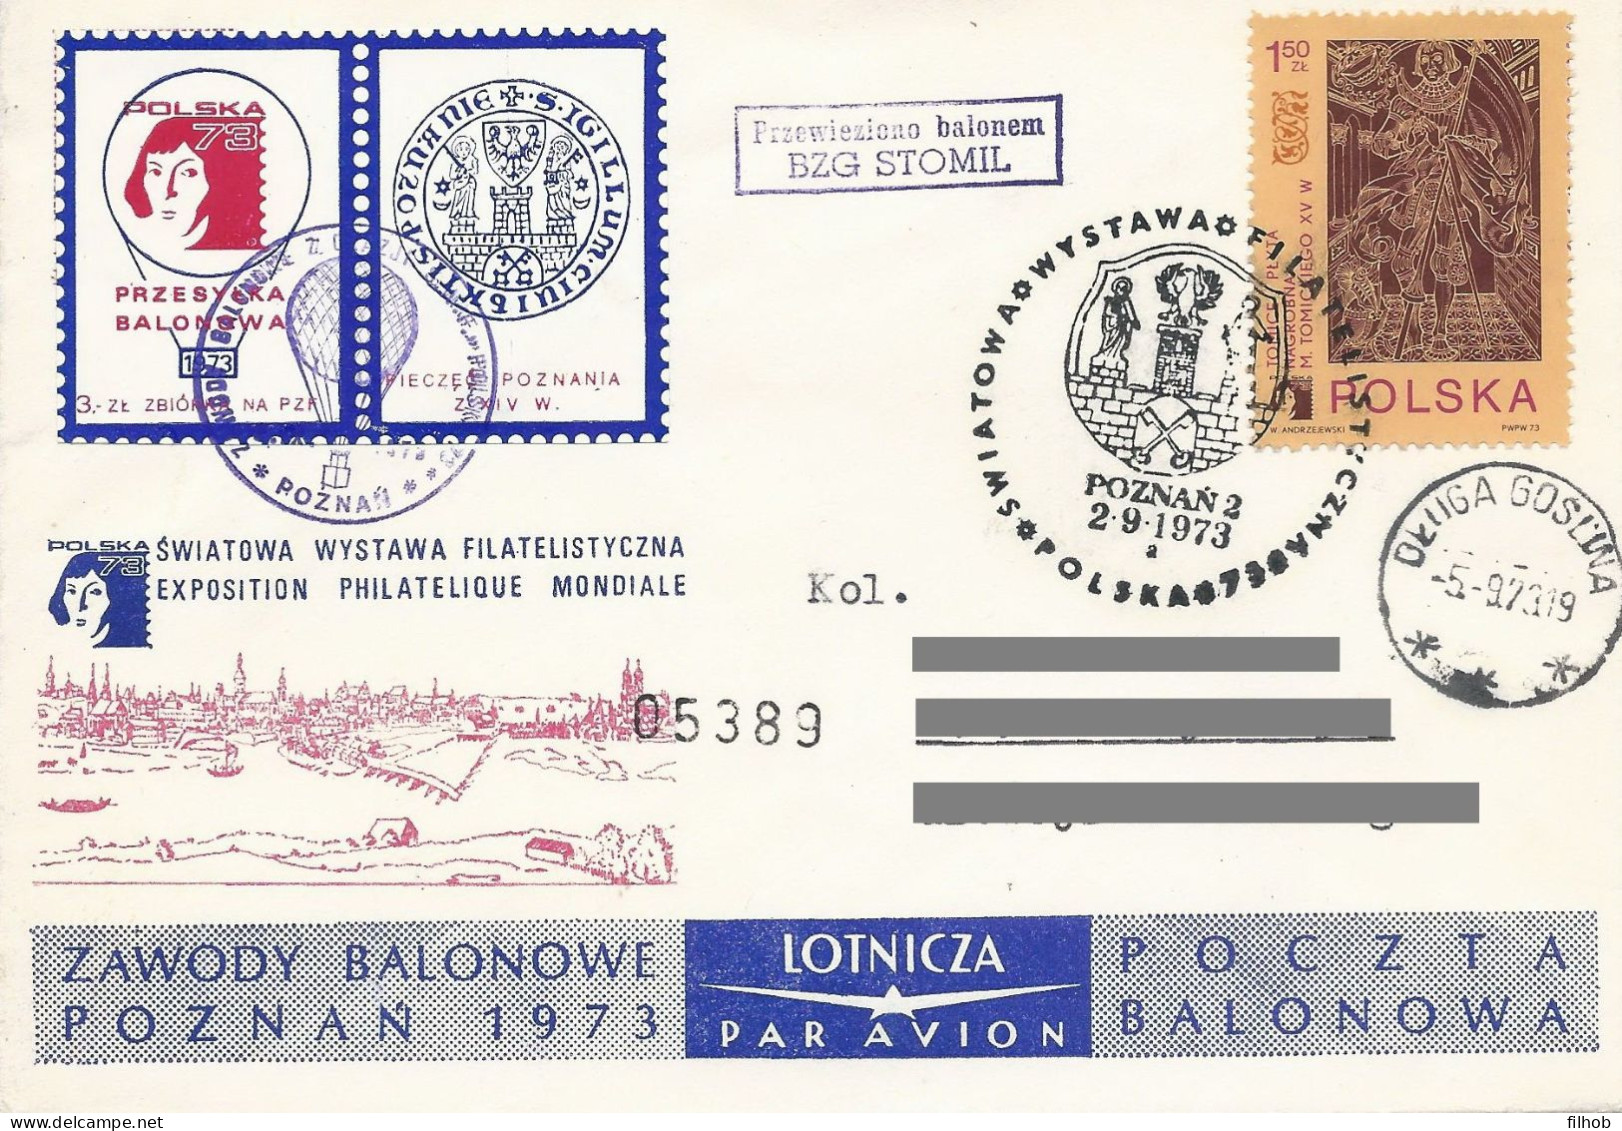 Poland Post - Balloon PBA.1973.poz.sto.B15: Competitions Poznan 73 STOMIL - Ballons